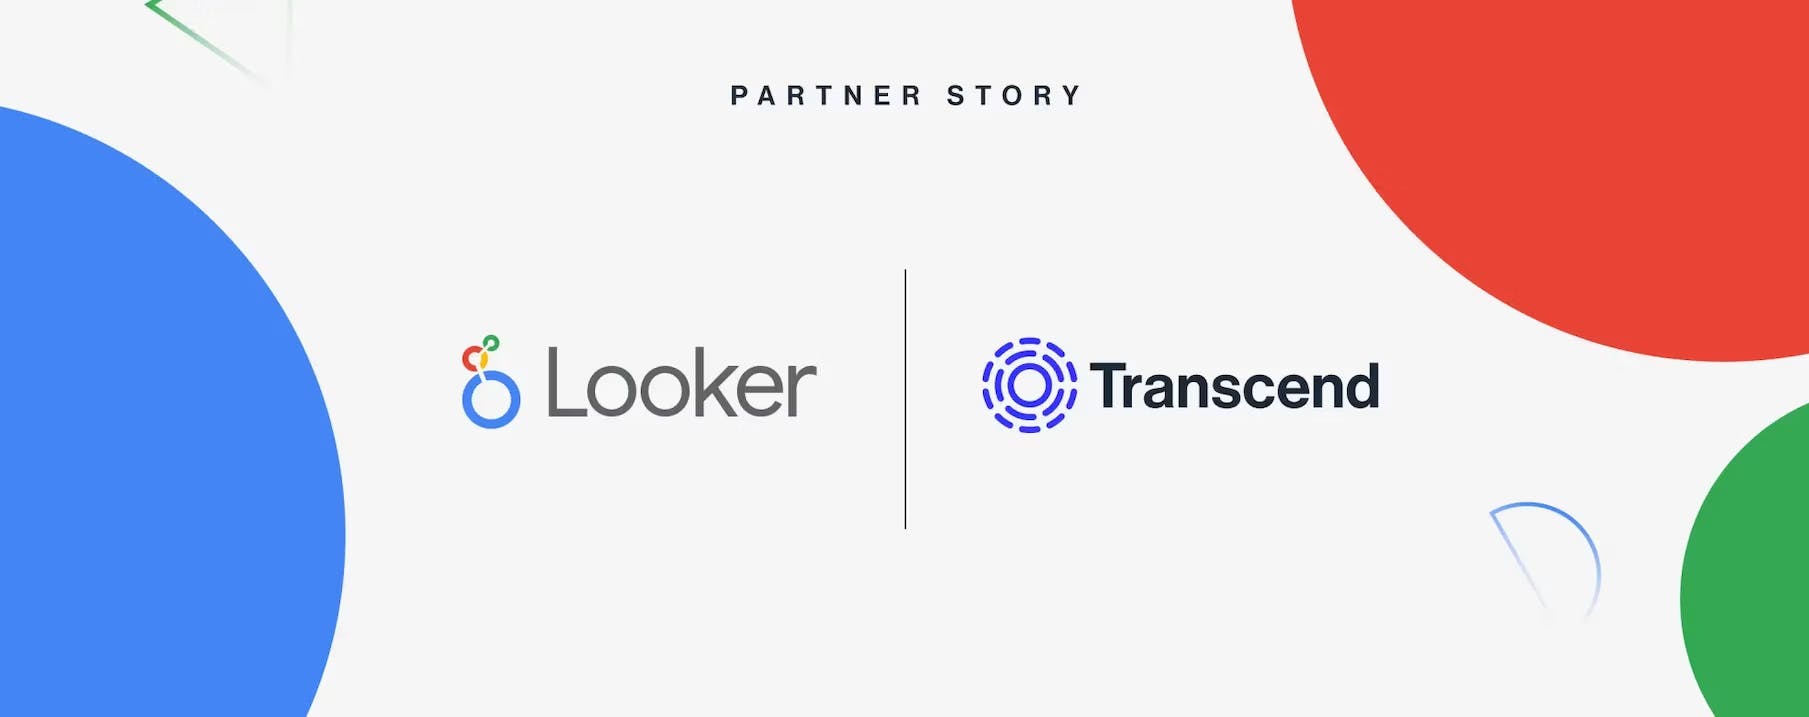 Looker partner story